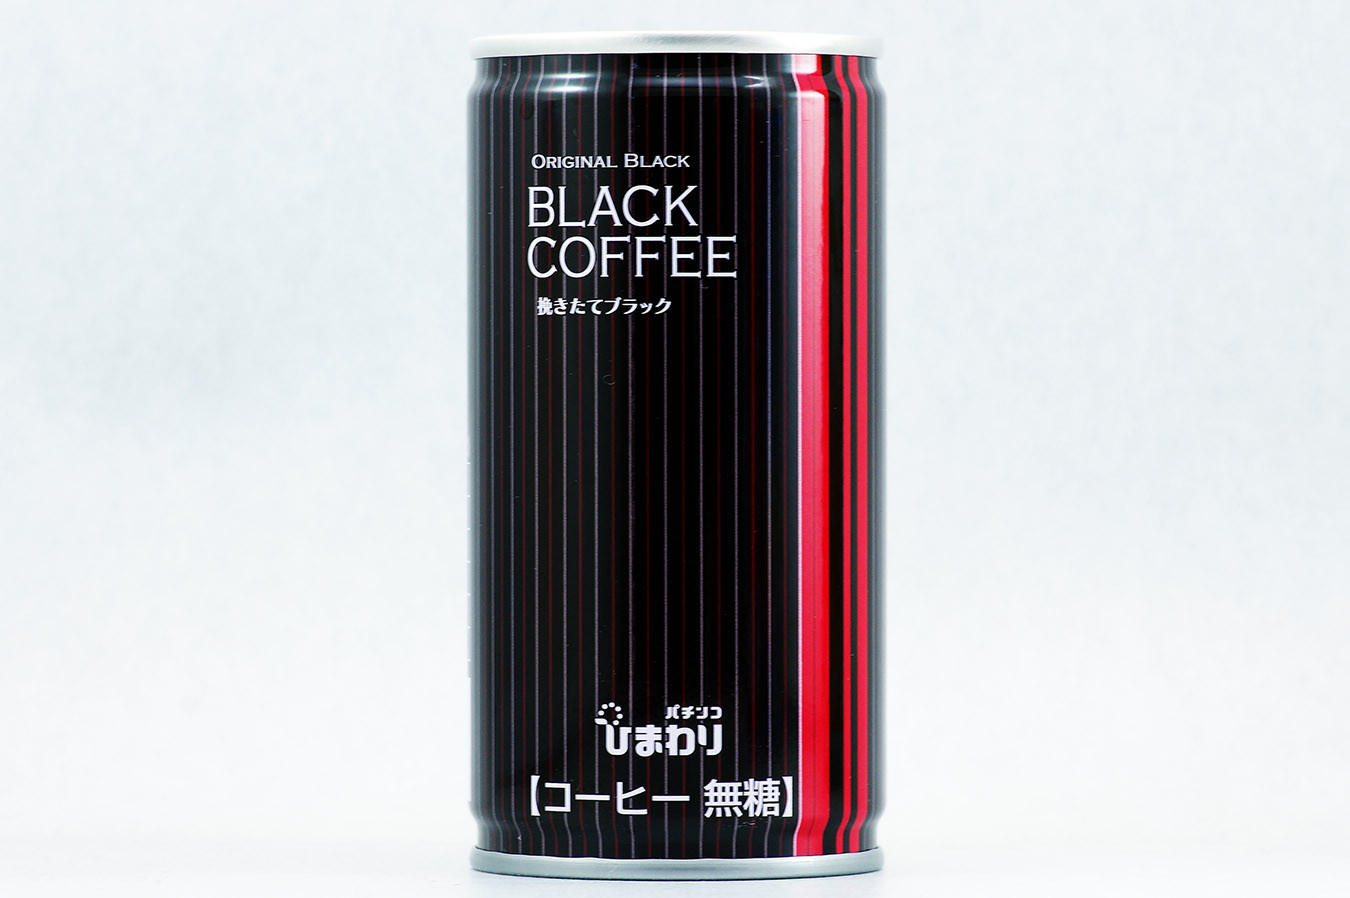 ORIGINAL BLACK ブラックコーヒー 2016年1月